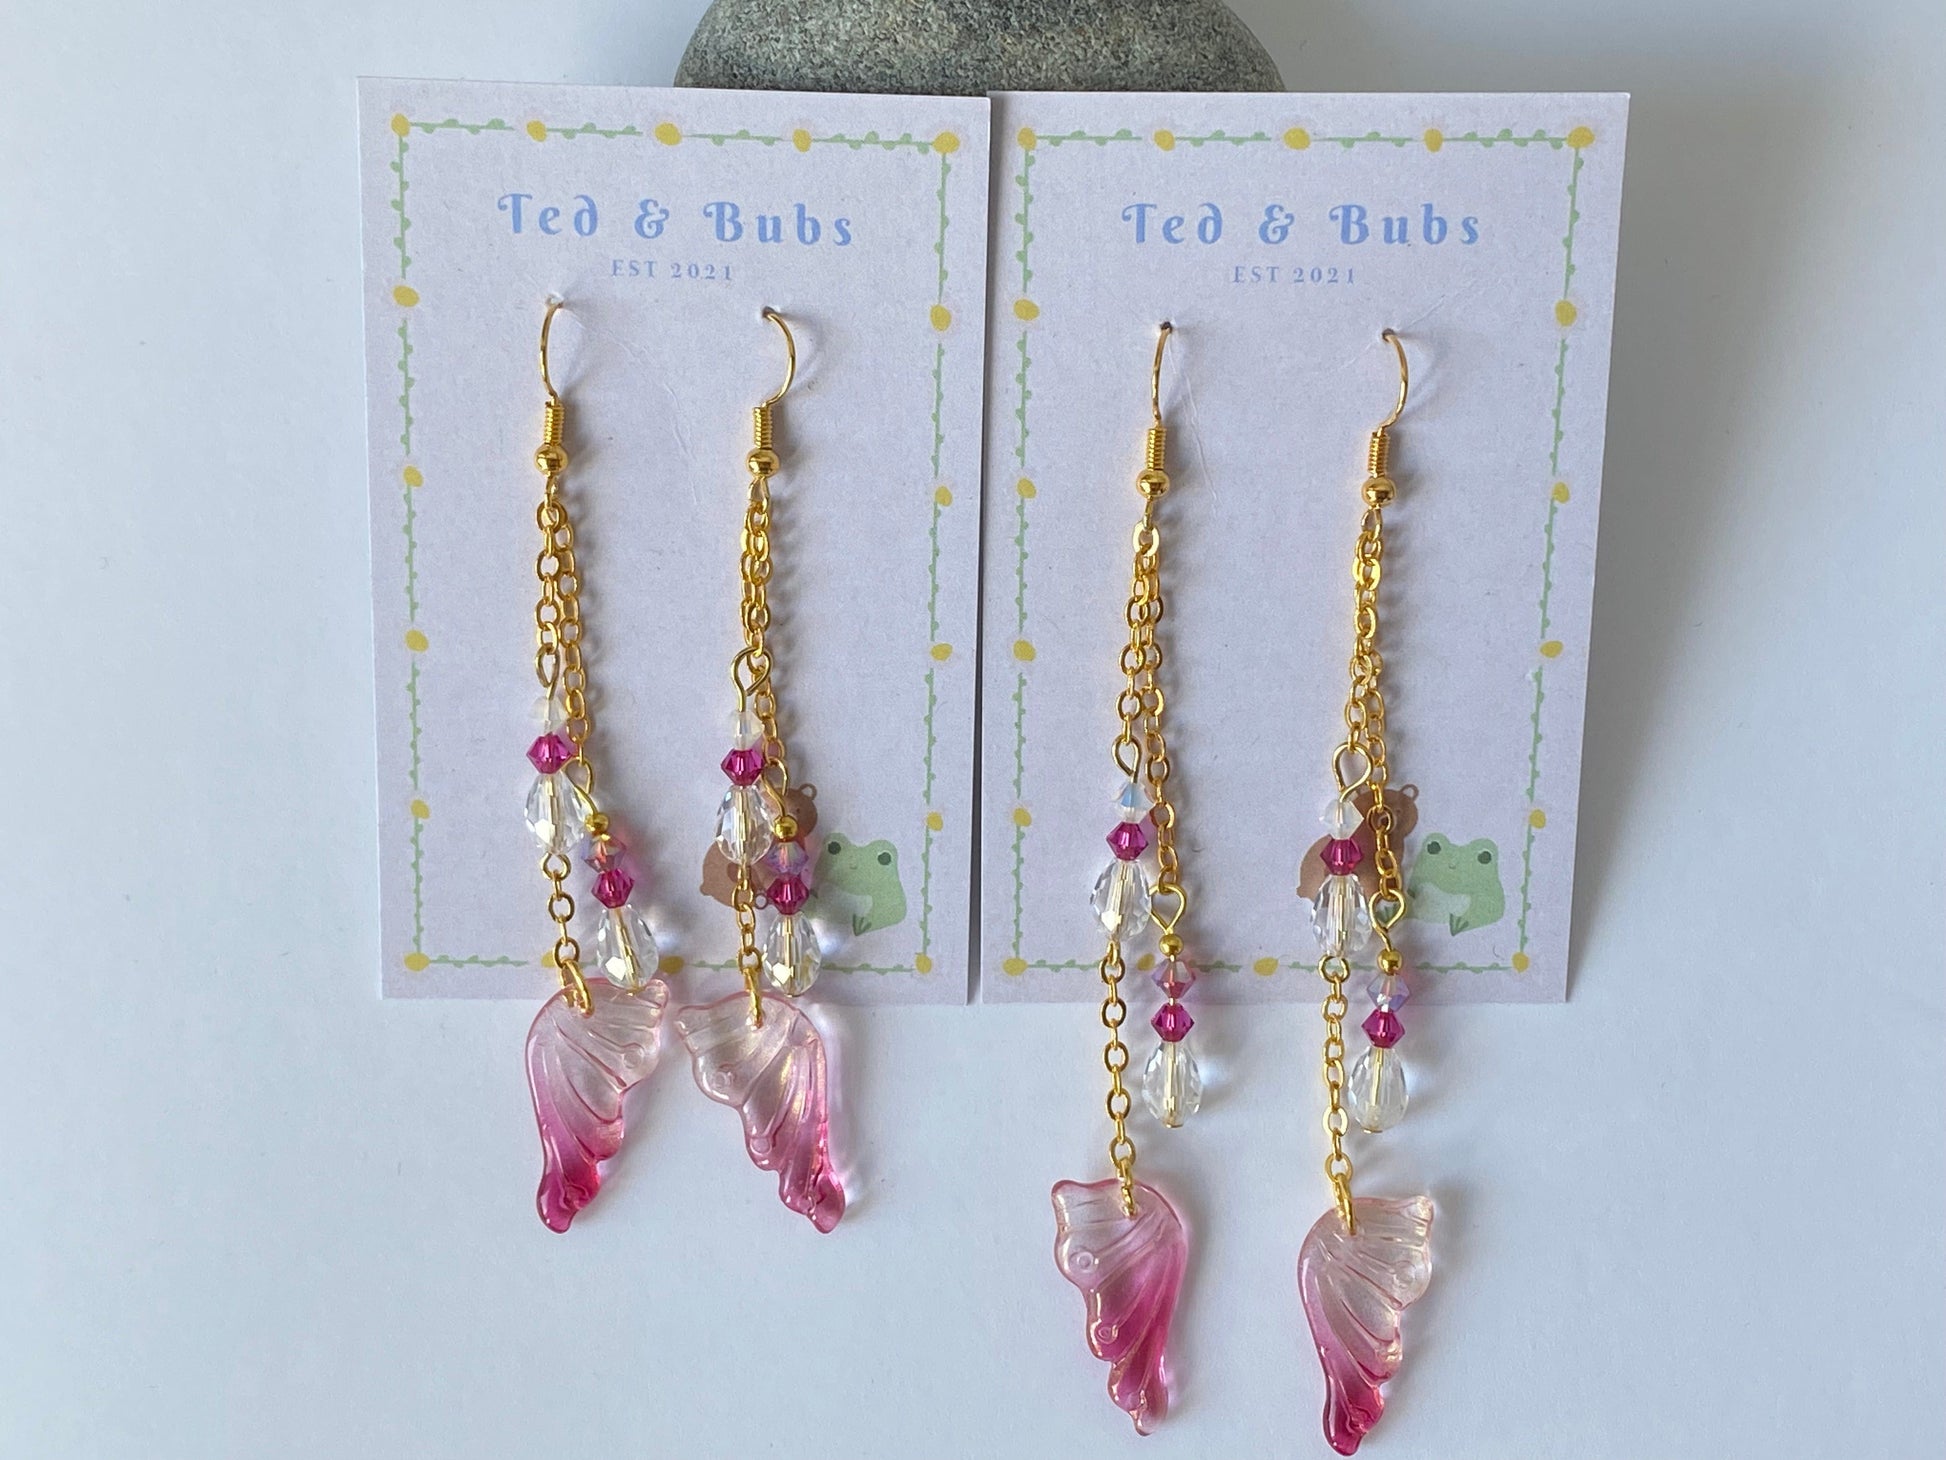 Ted & Bubs Earrings Copy of Fairy Wing Earrings - Raspberry Gold